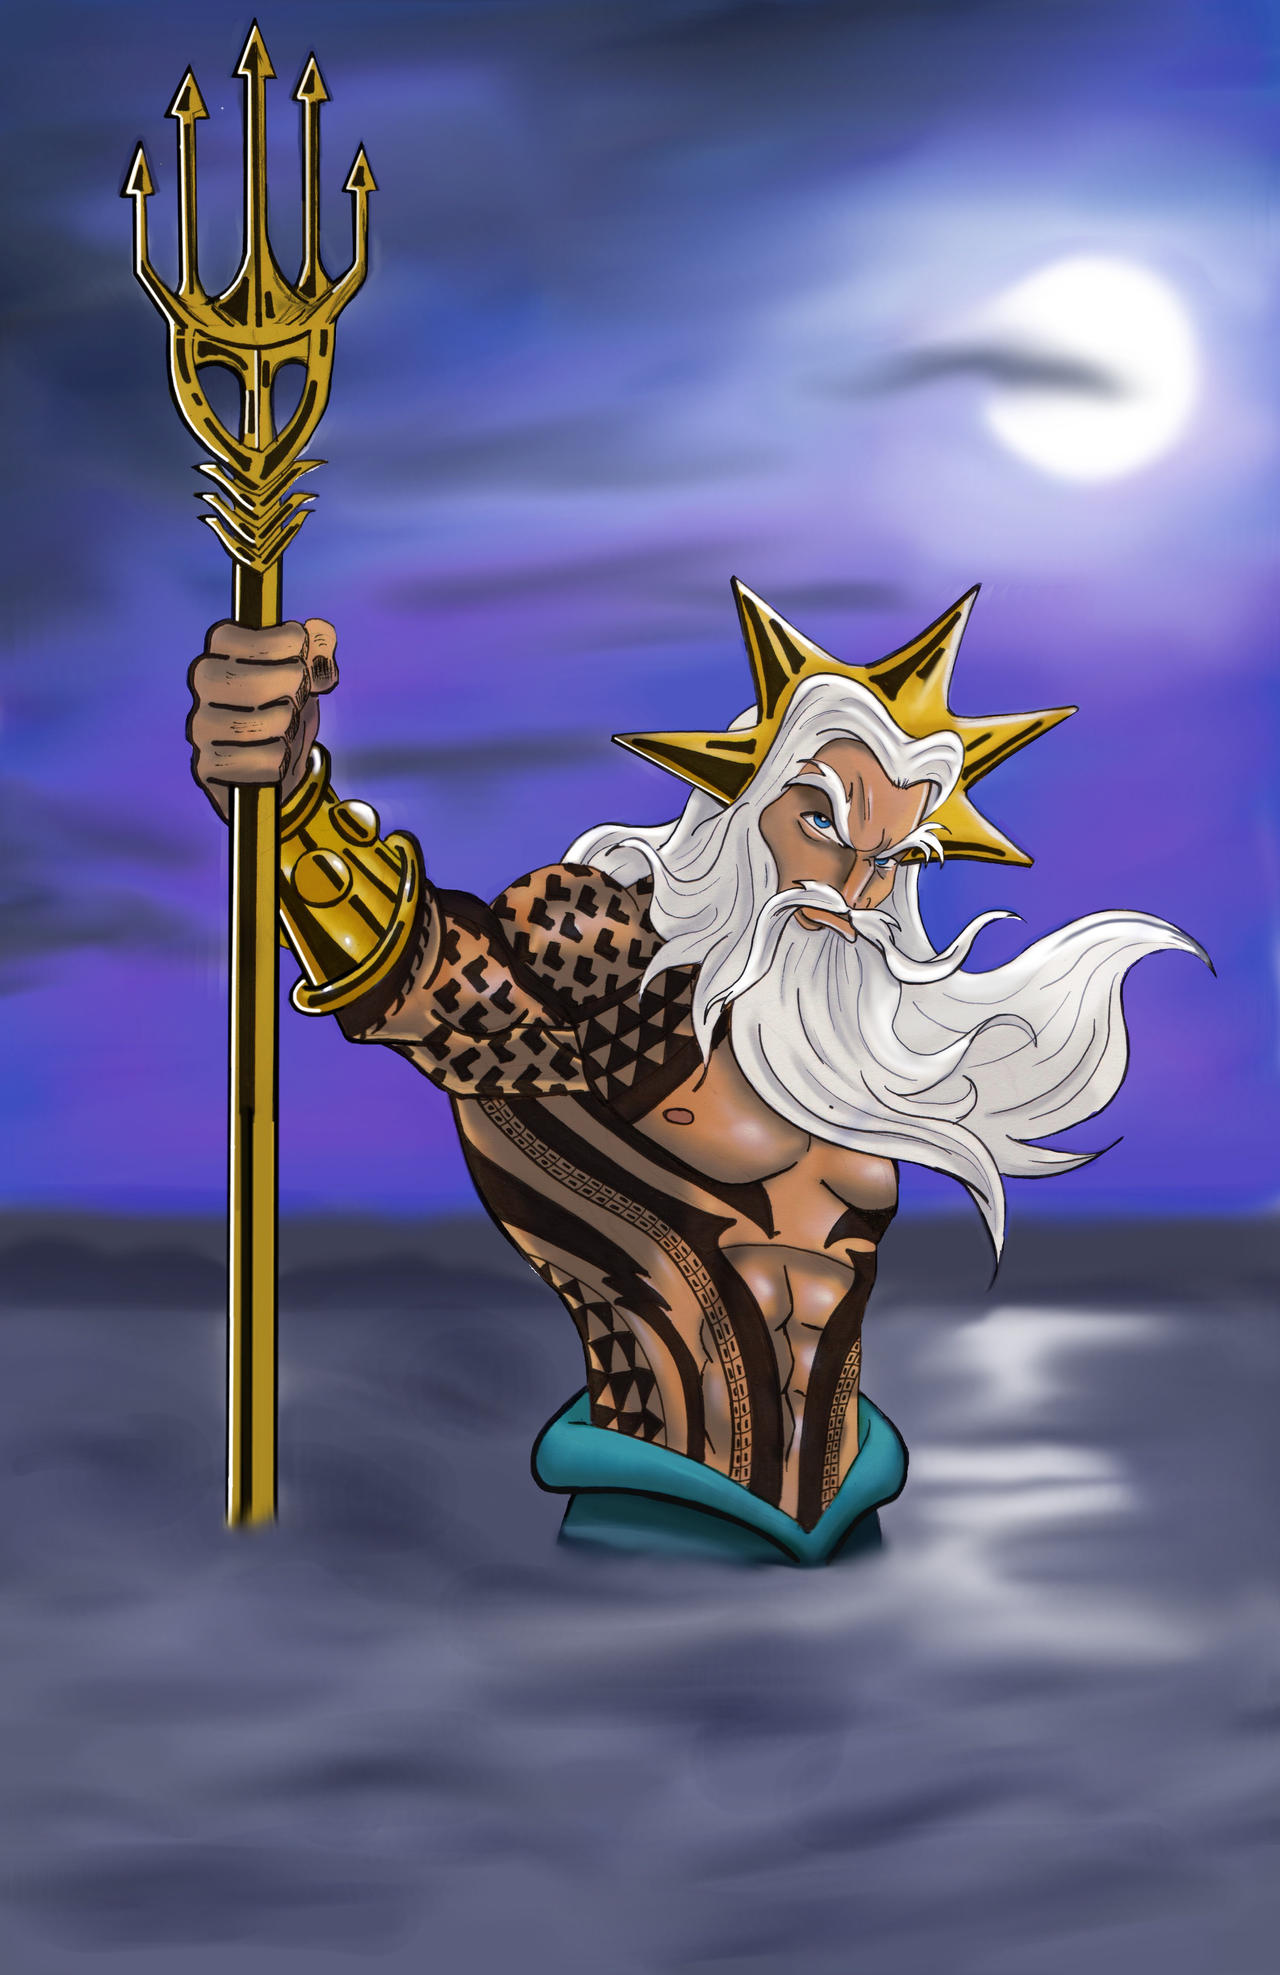 King Triton Aquaman By Gilliland35 On Deviantart